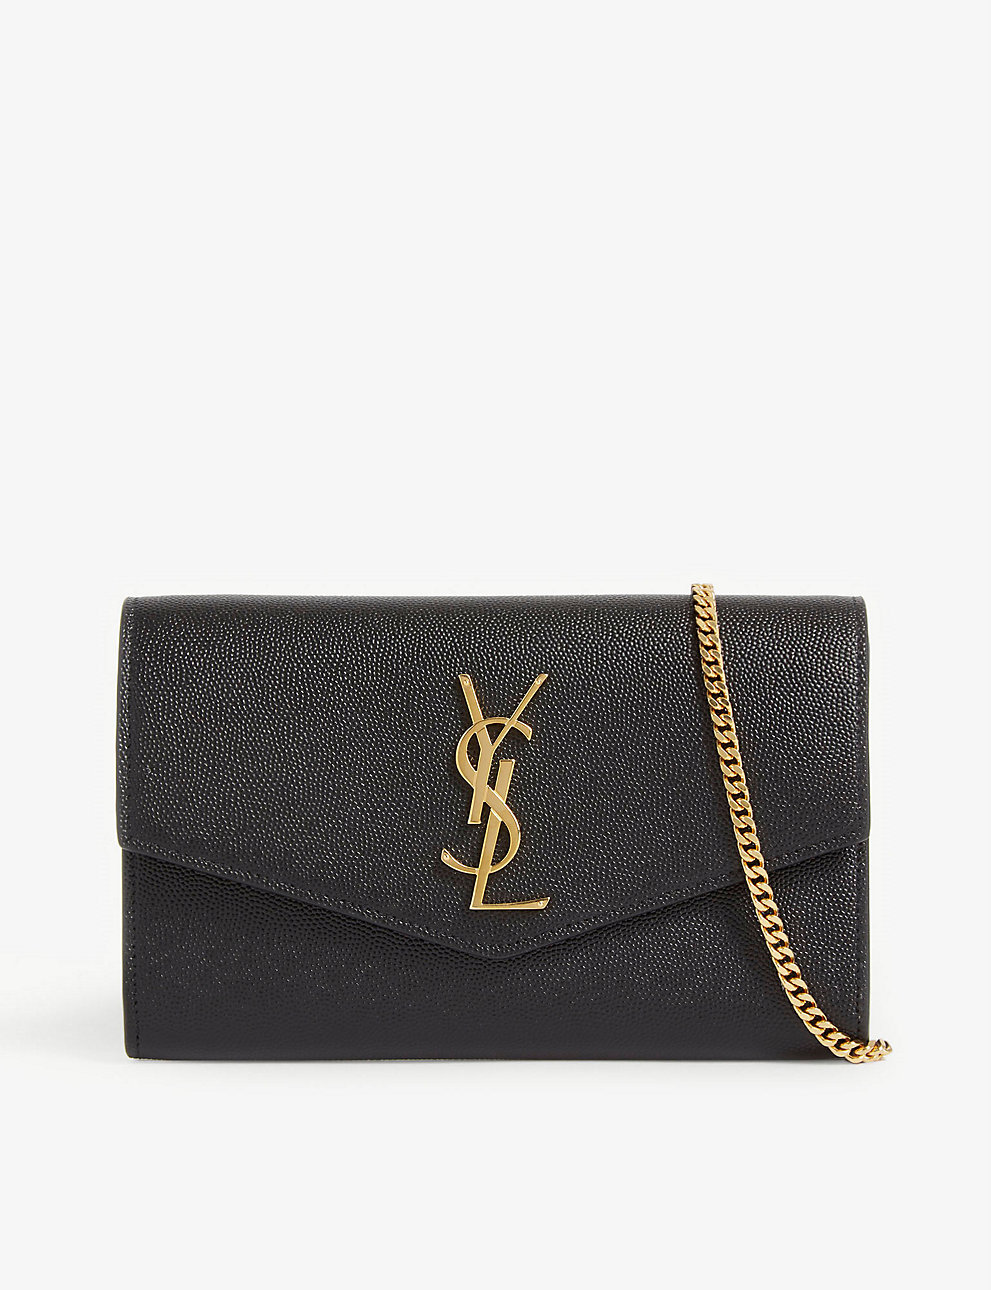 Replica Louis Vuitton Cross Body Bag